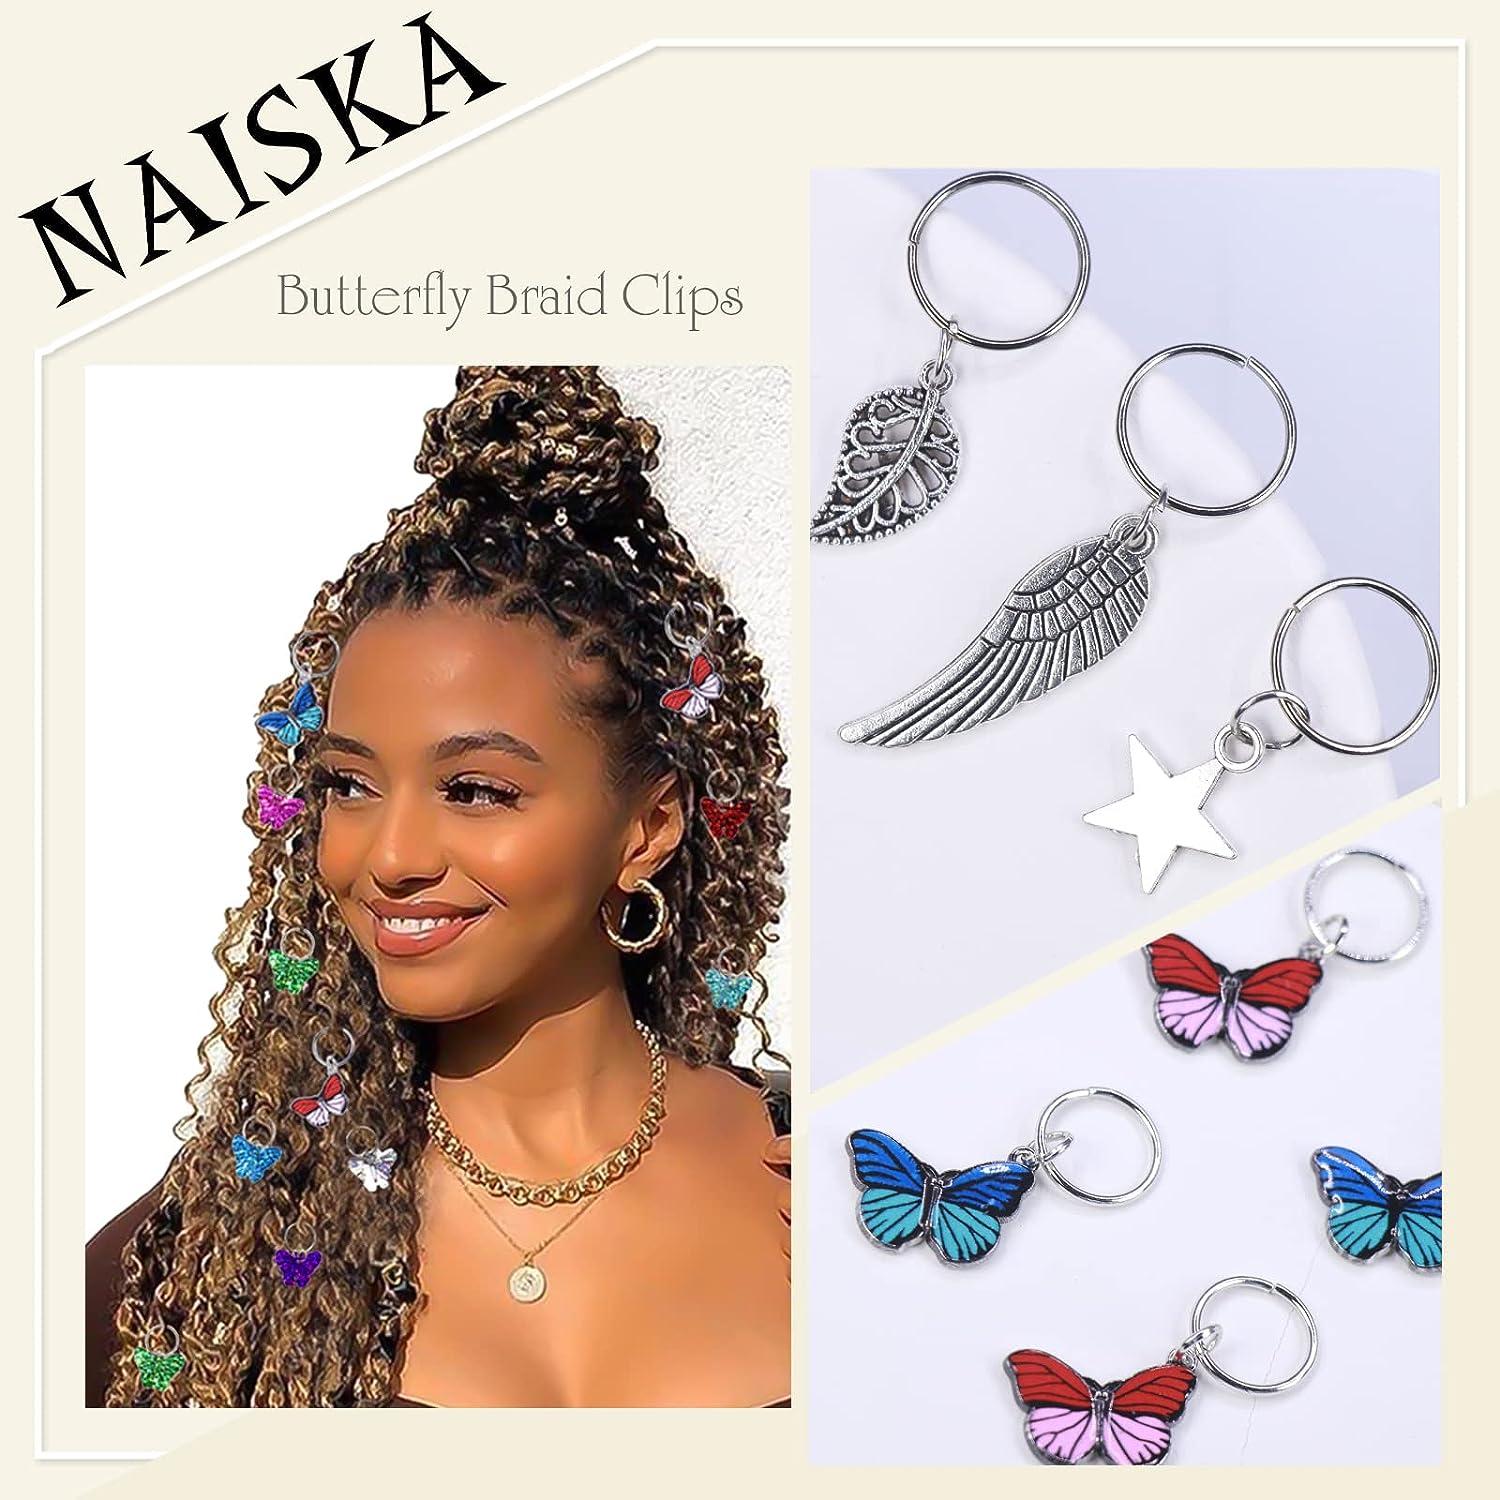 Naiska 20pcs Gold Butterfly Braid Clips Pearl Shiny Hair Dreadlock Accessories Colorful Butterflies Pendant Crystal Dreadlock Charms Star Braid